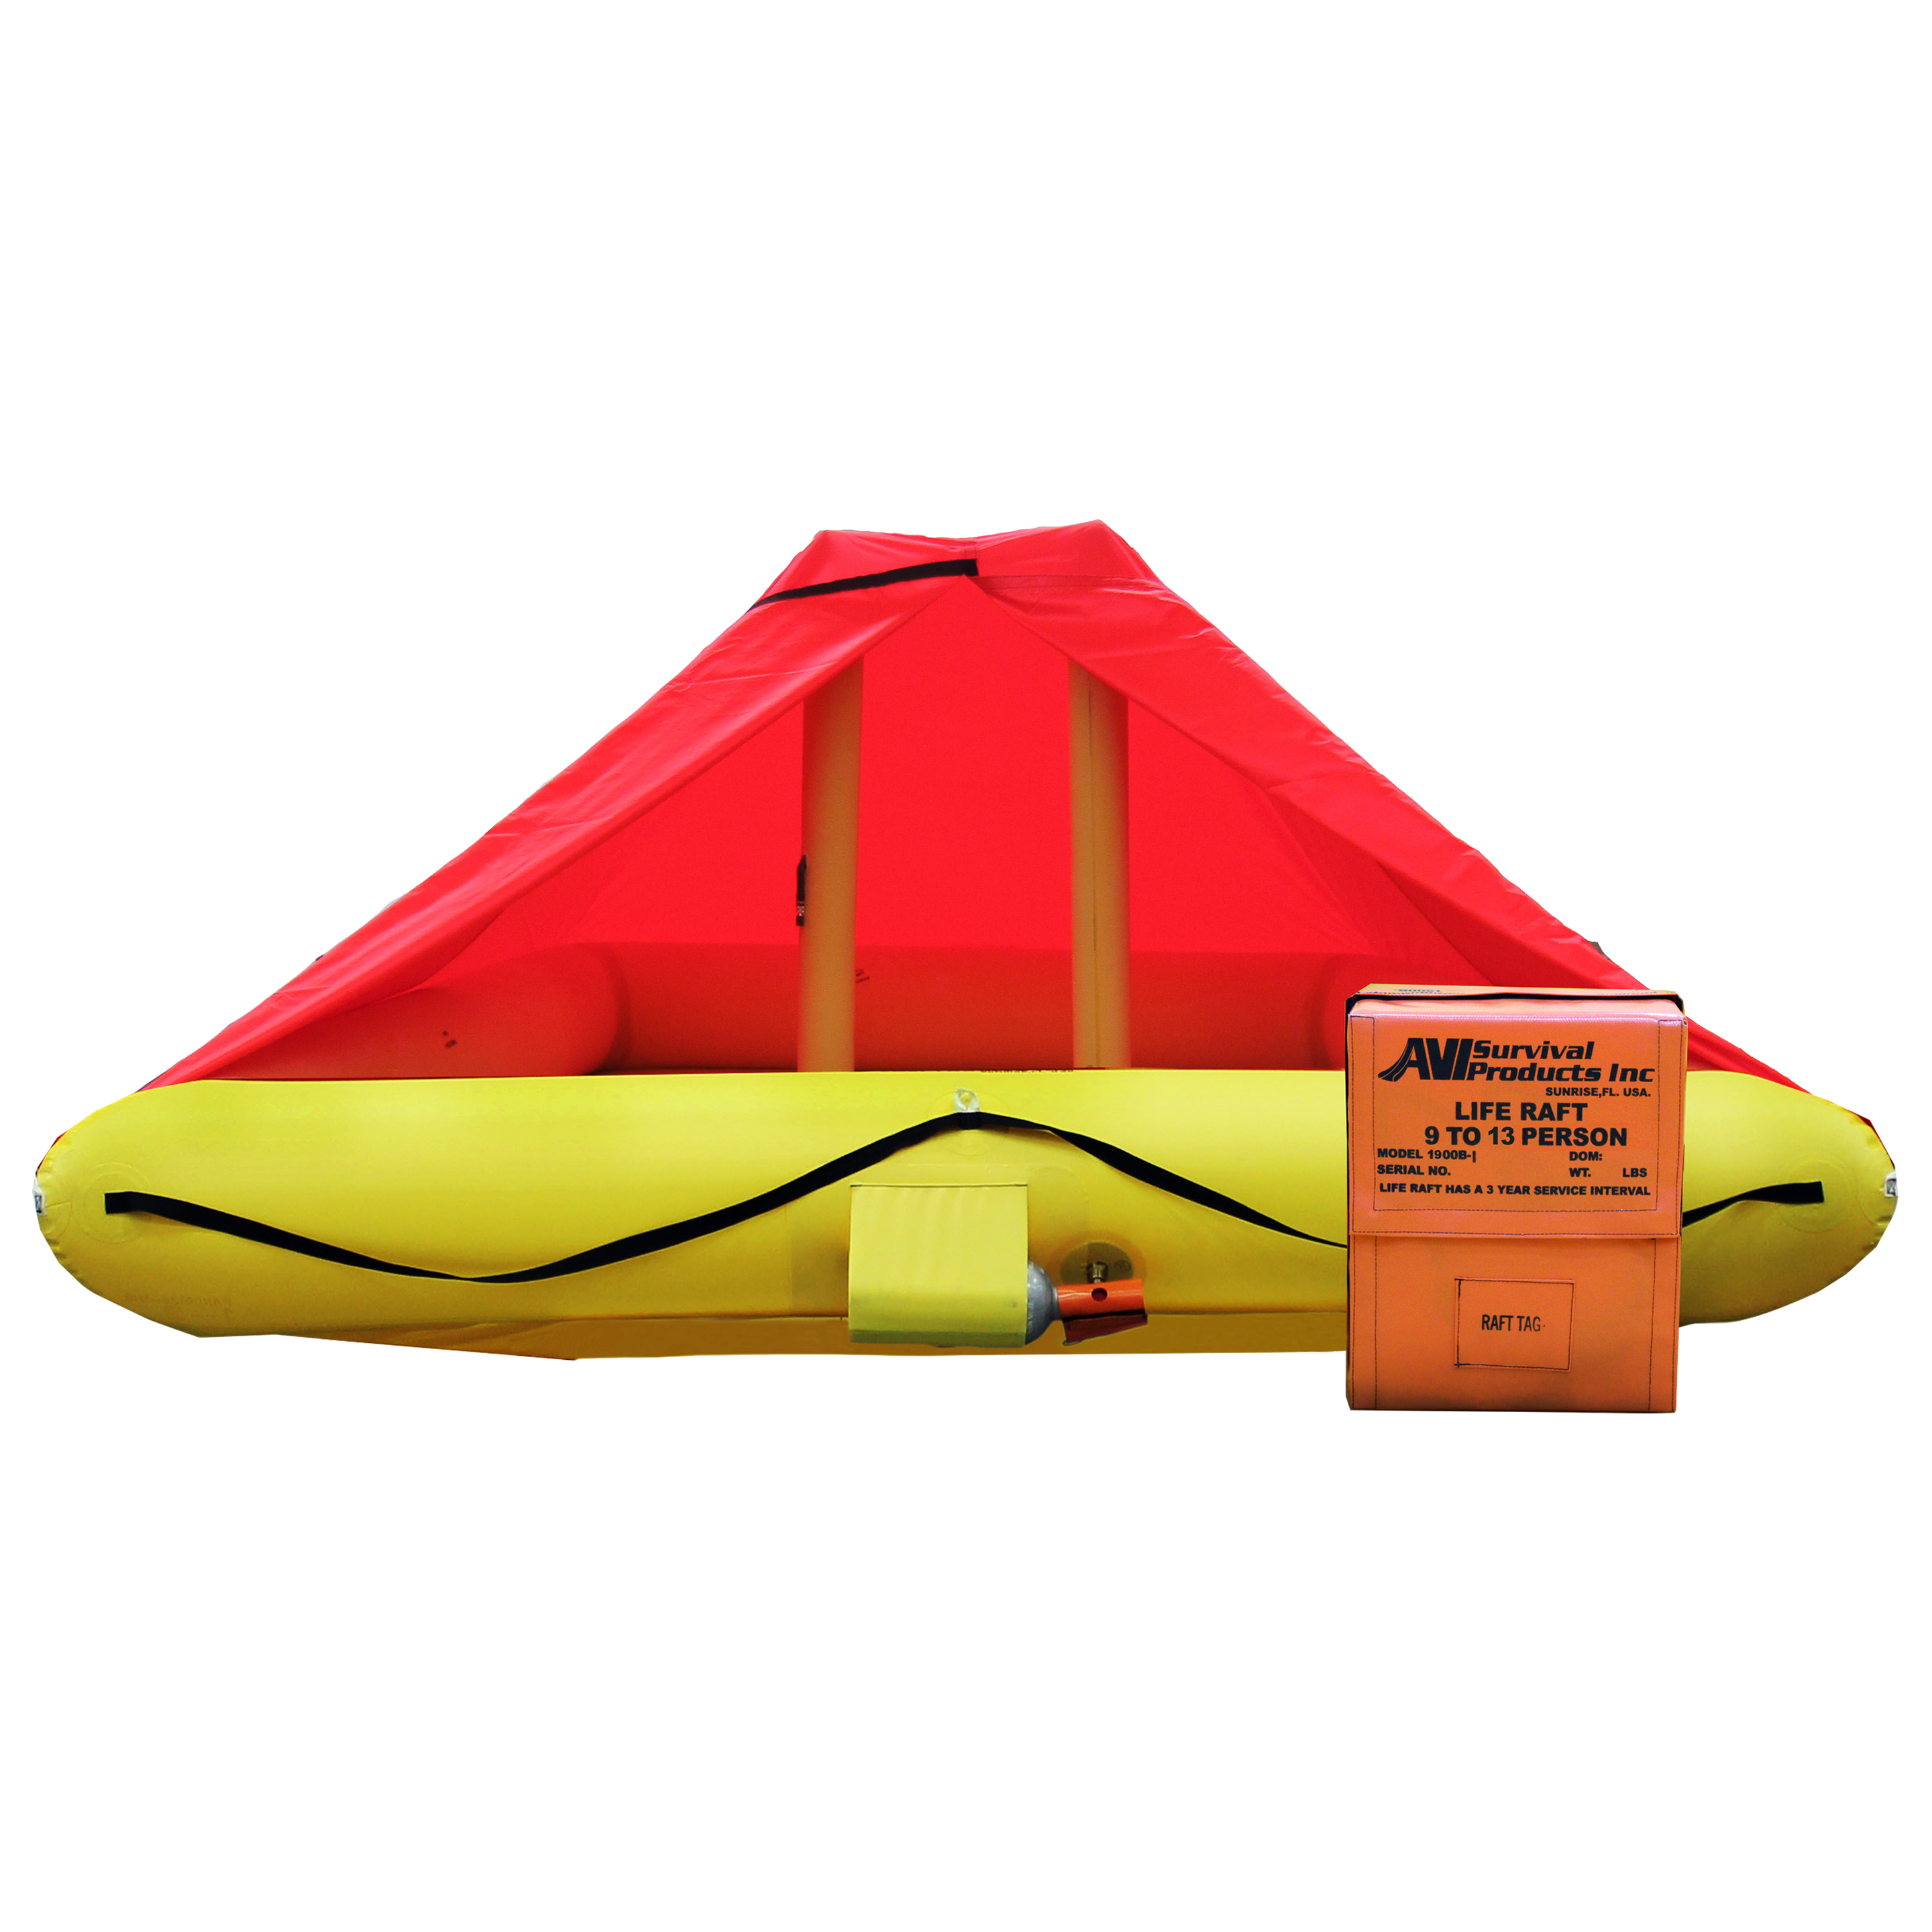 NON TSO 9 Person Life Raft with Canopy